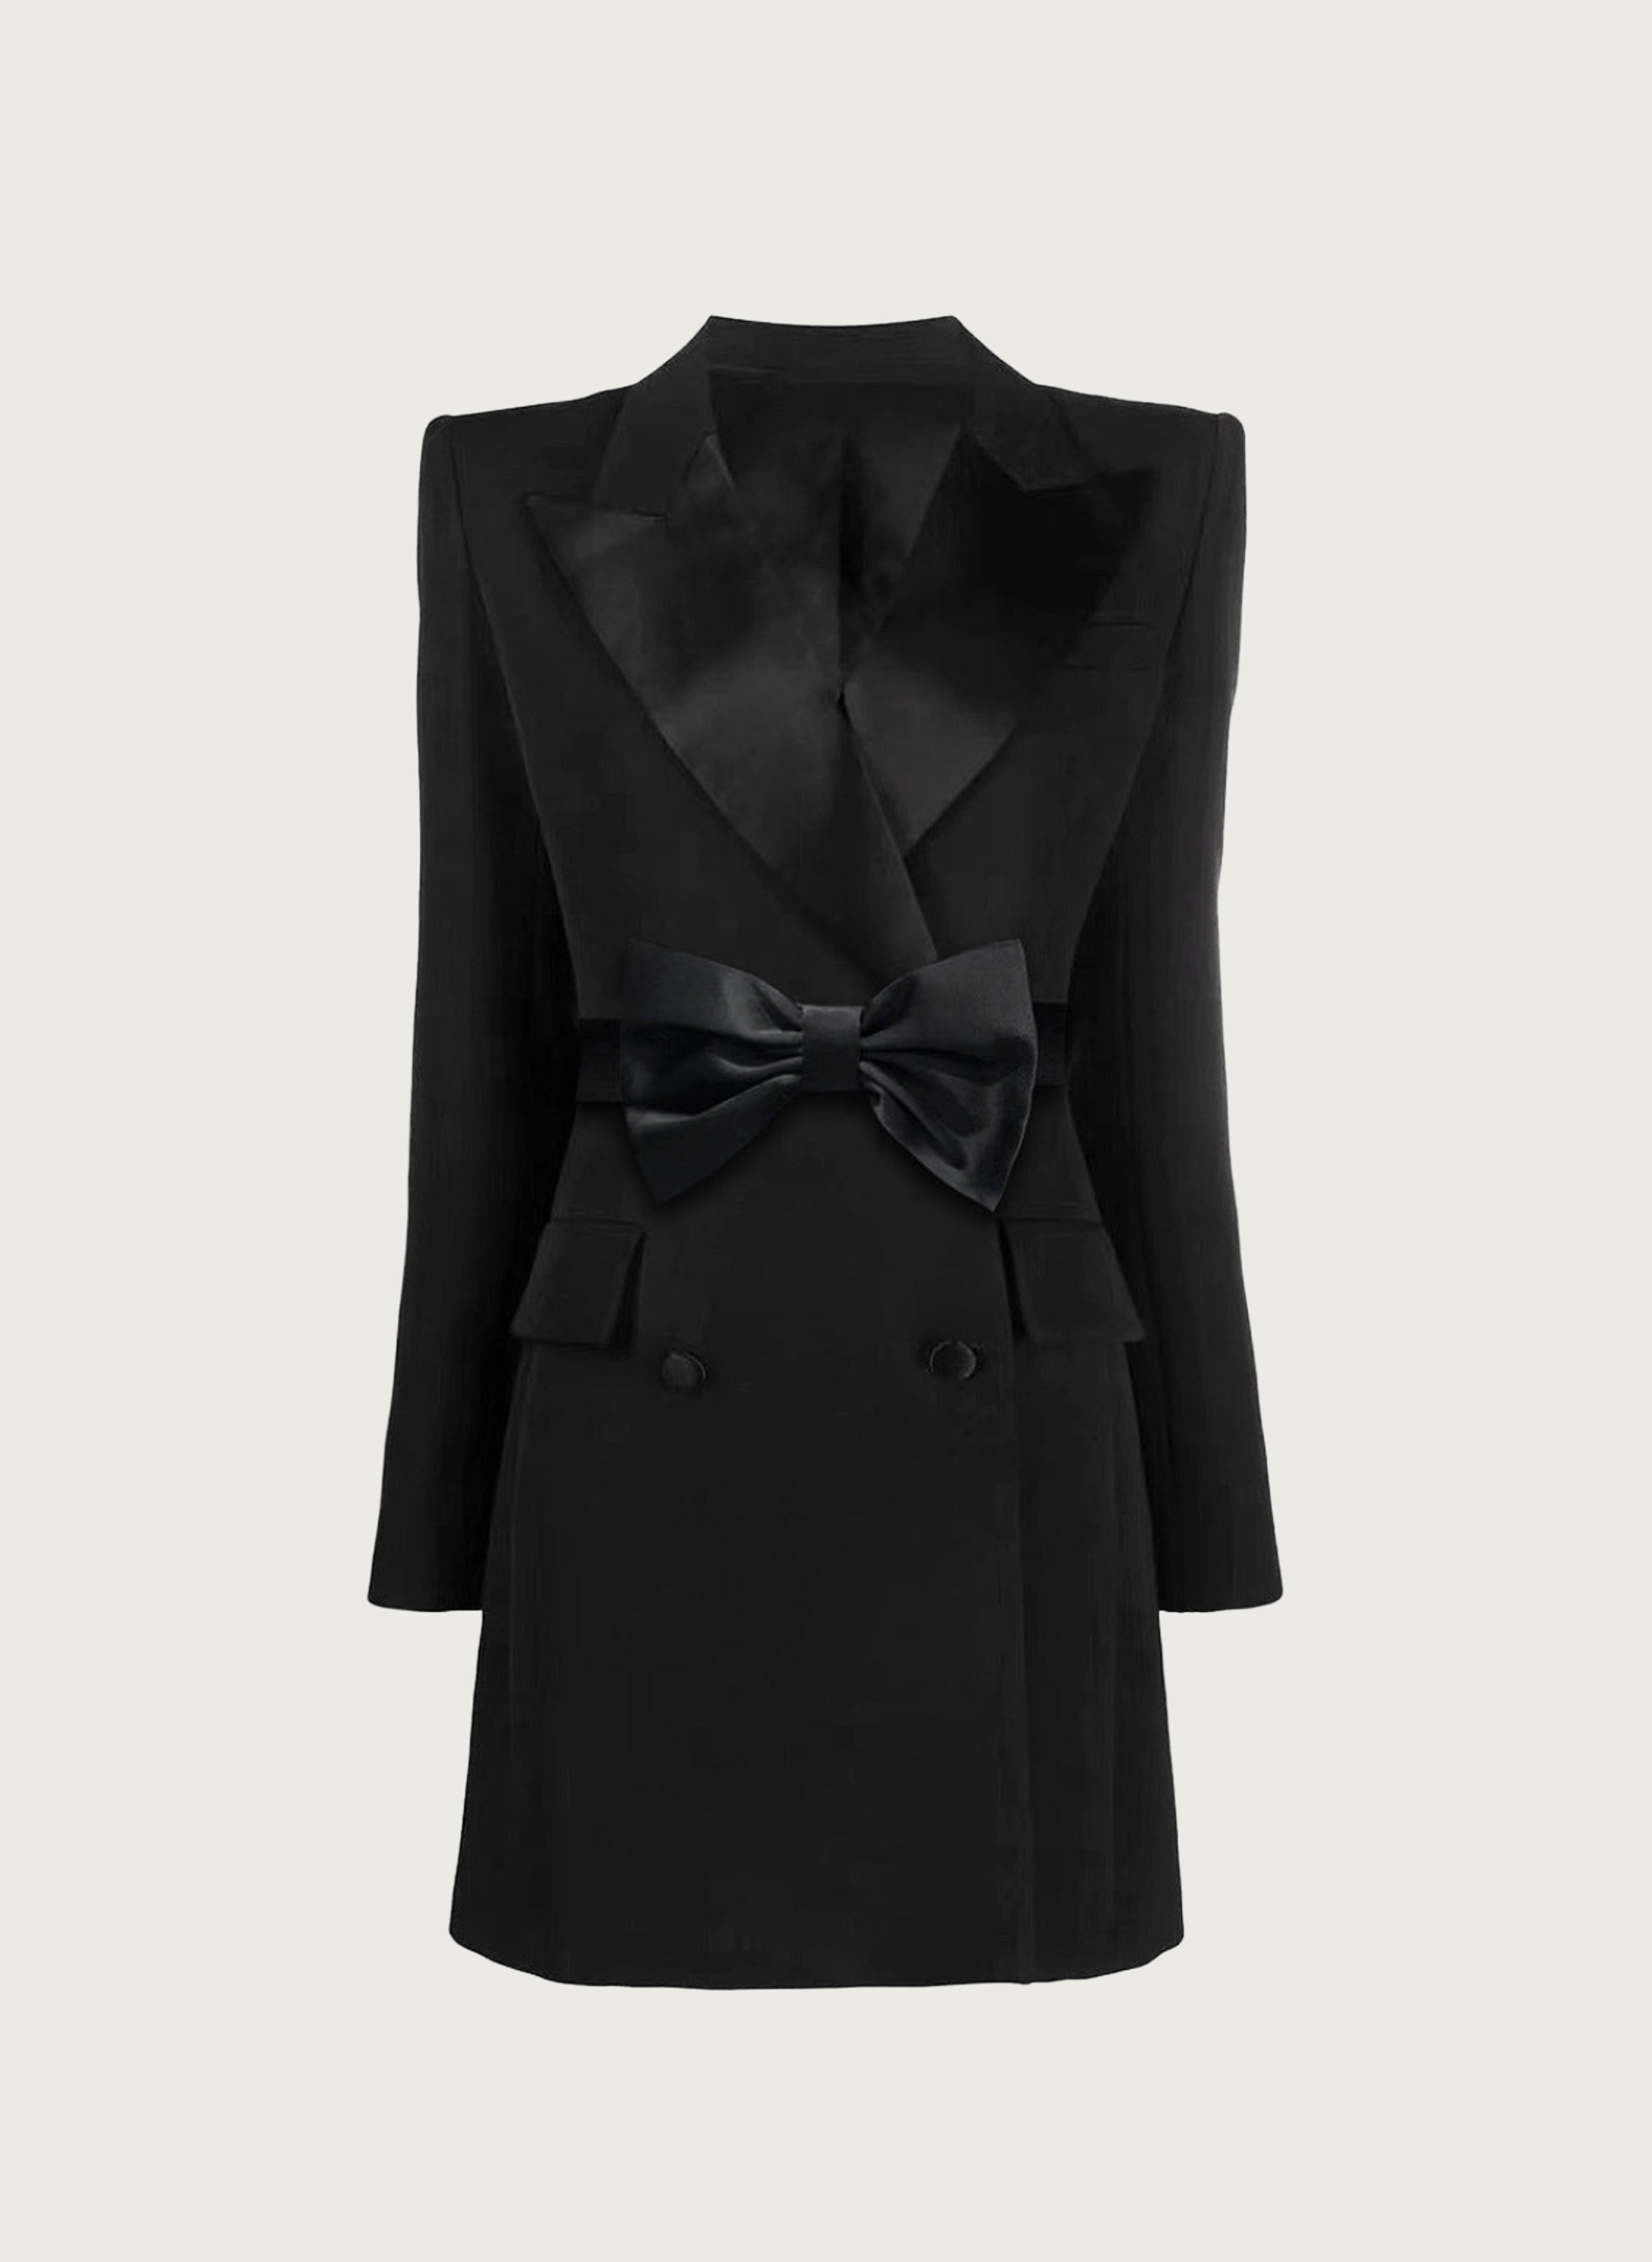 Sleek Elegance Bow-Belted Black Blazer Dress